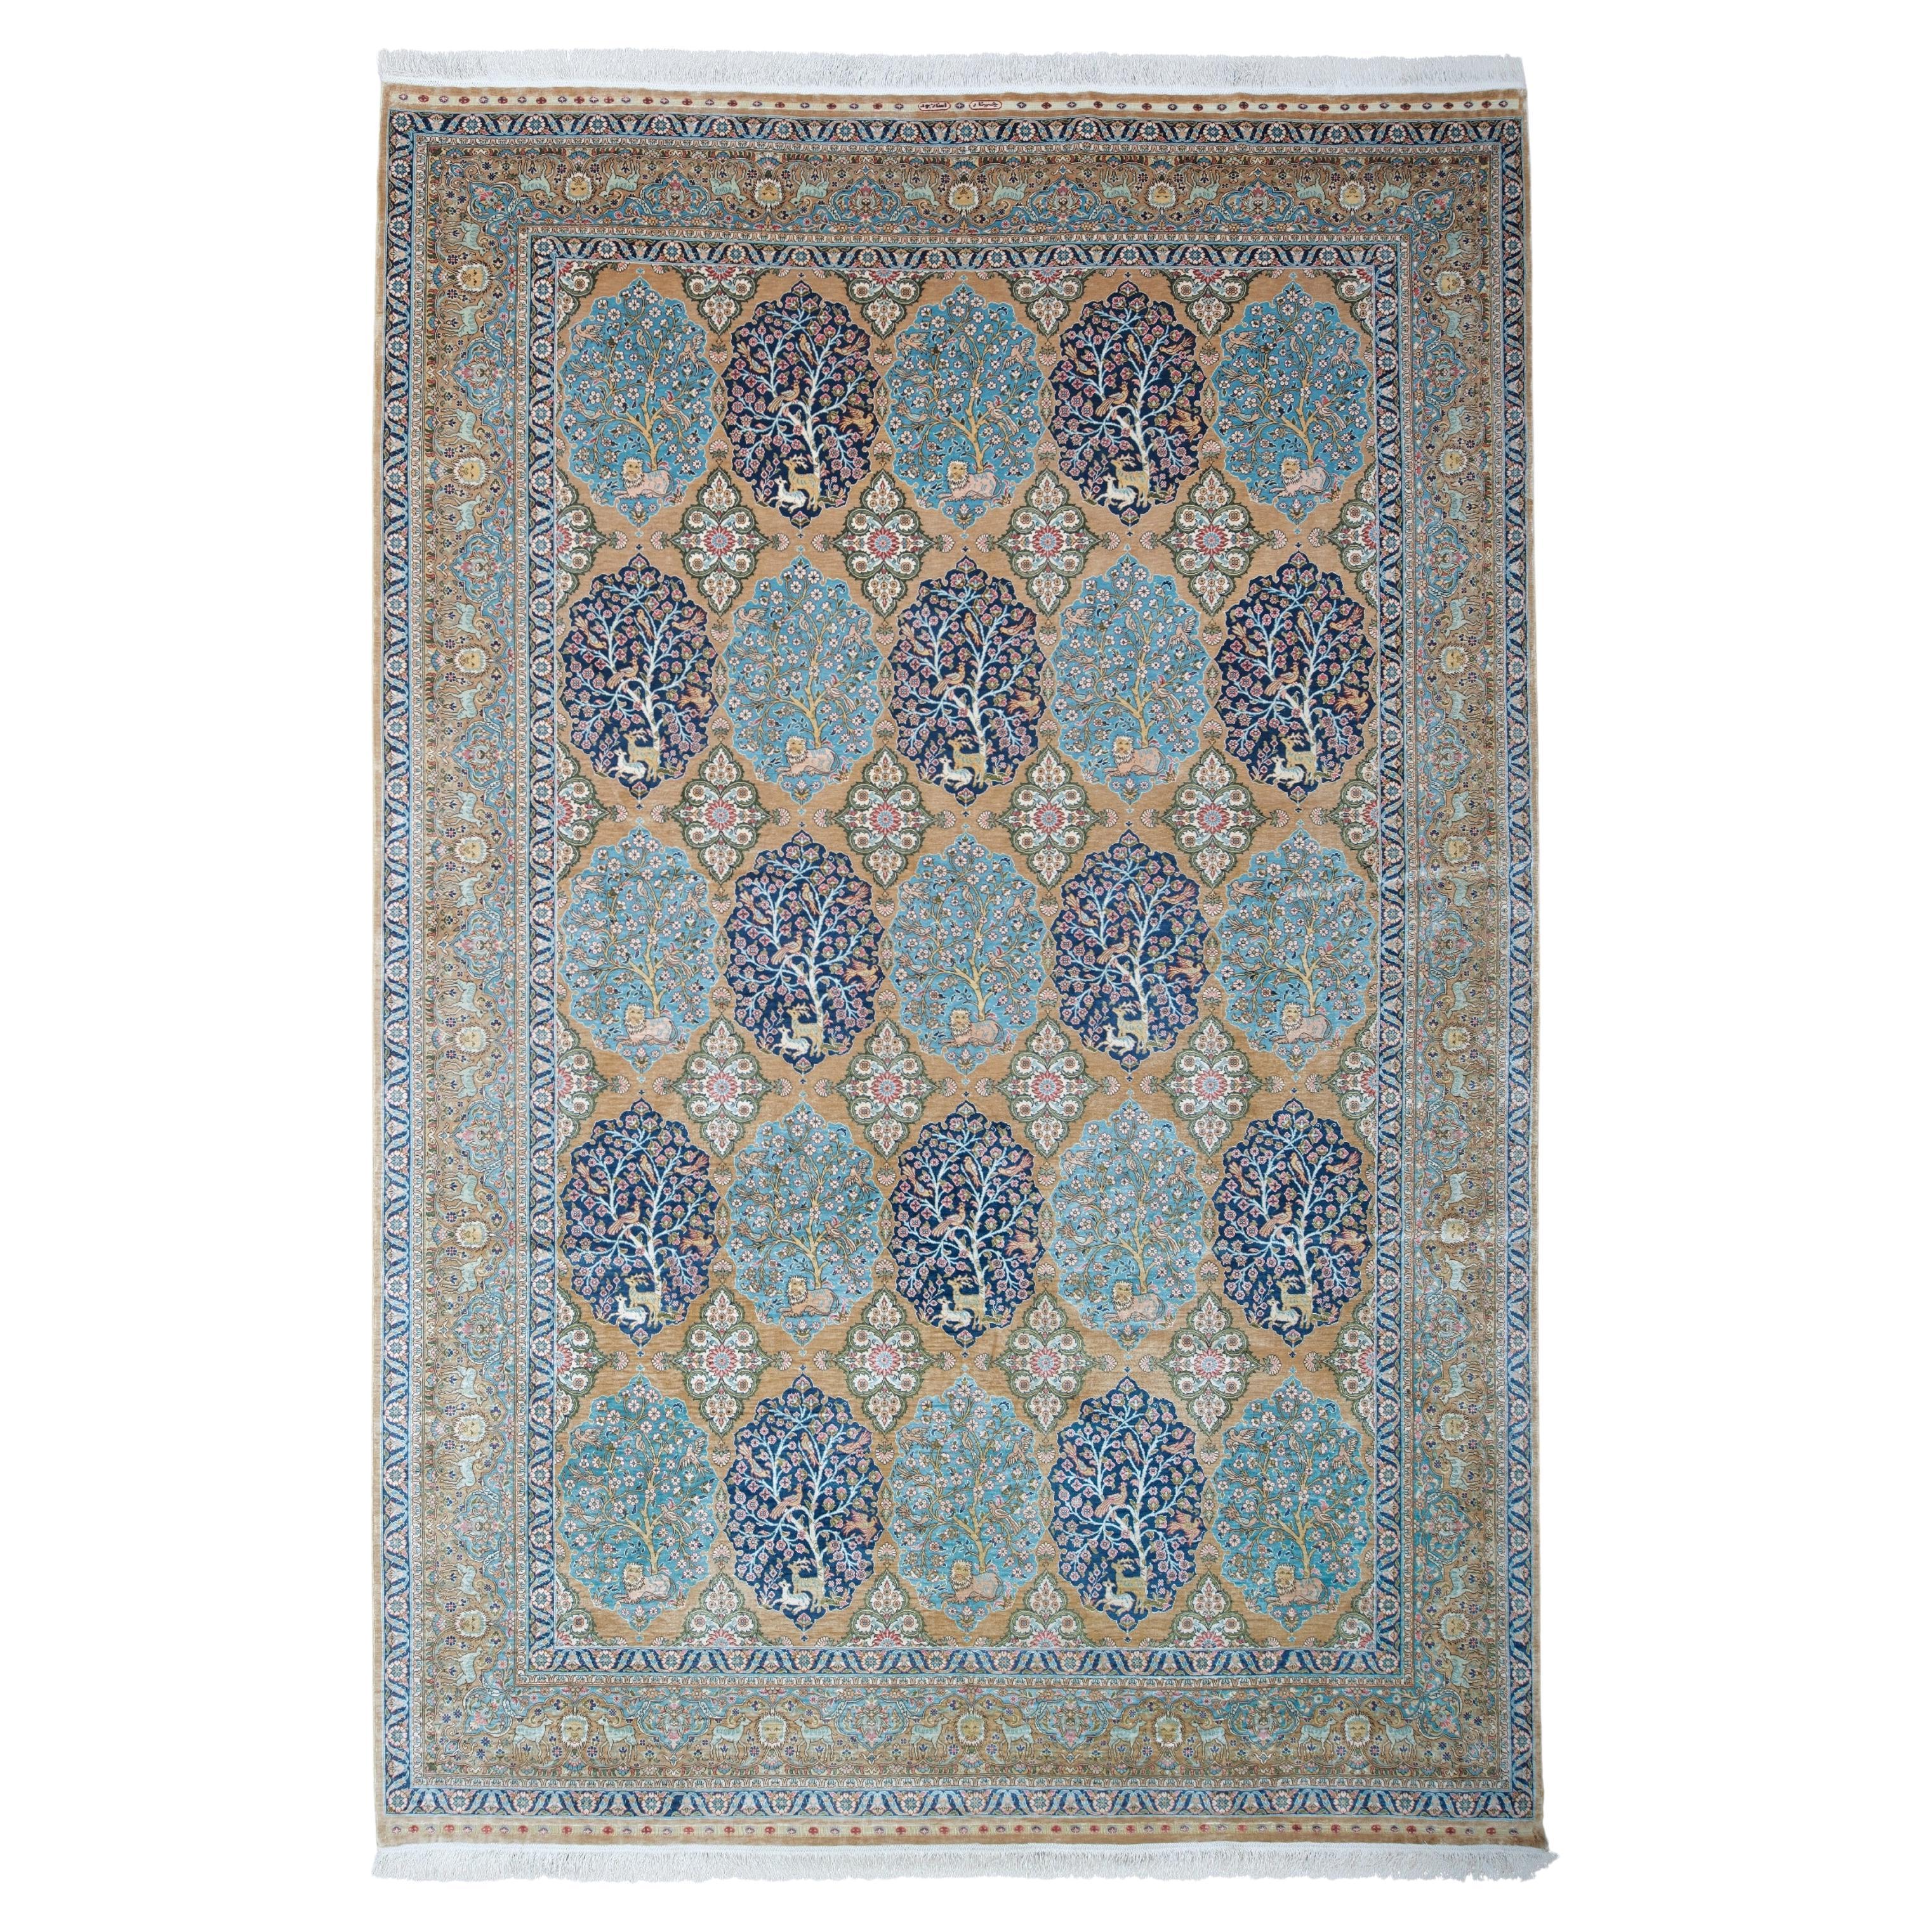 Early 20th Century Hereke Silk Carpet, Silk Carpet, Antique Silk Rug For Sale